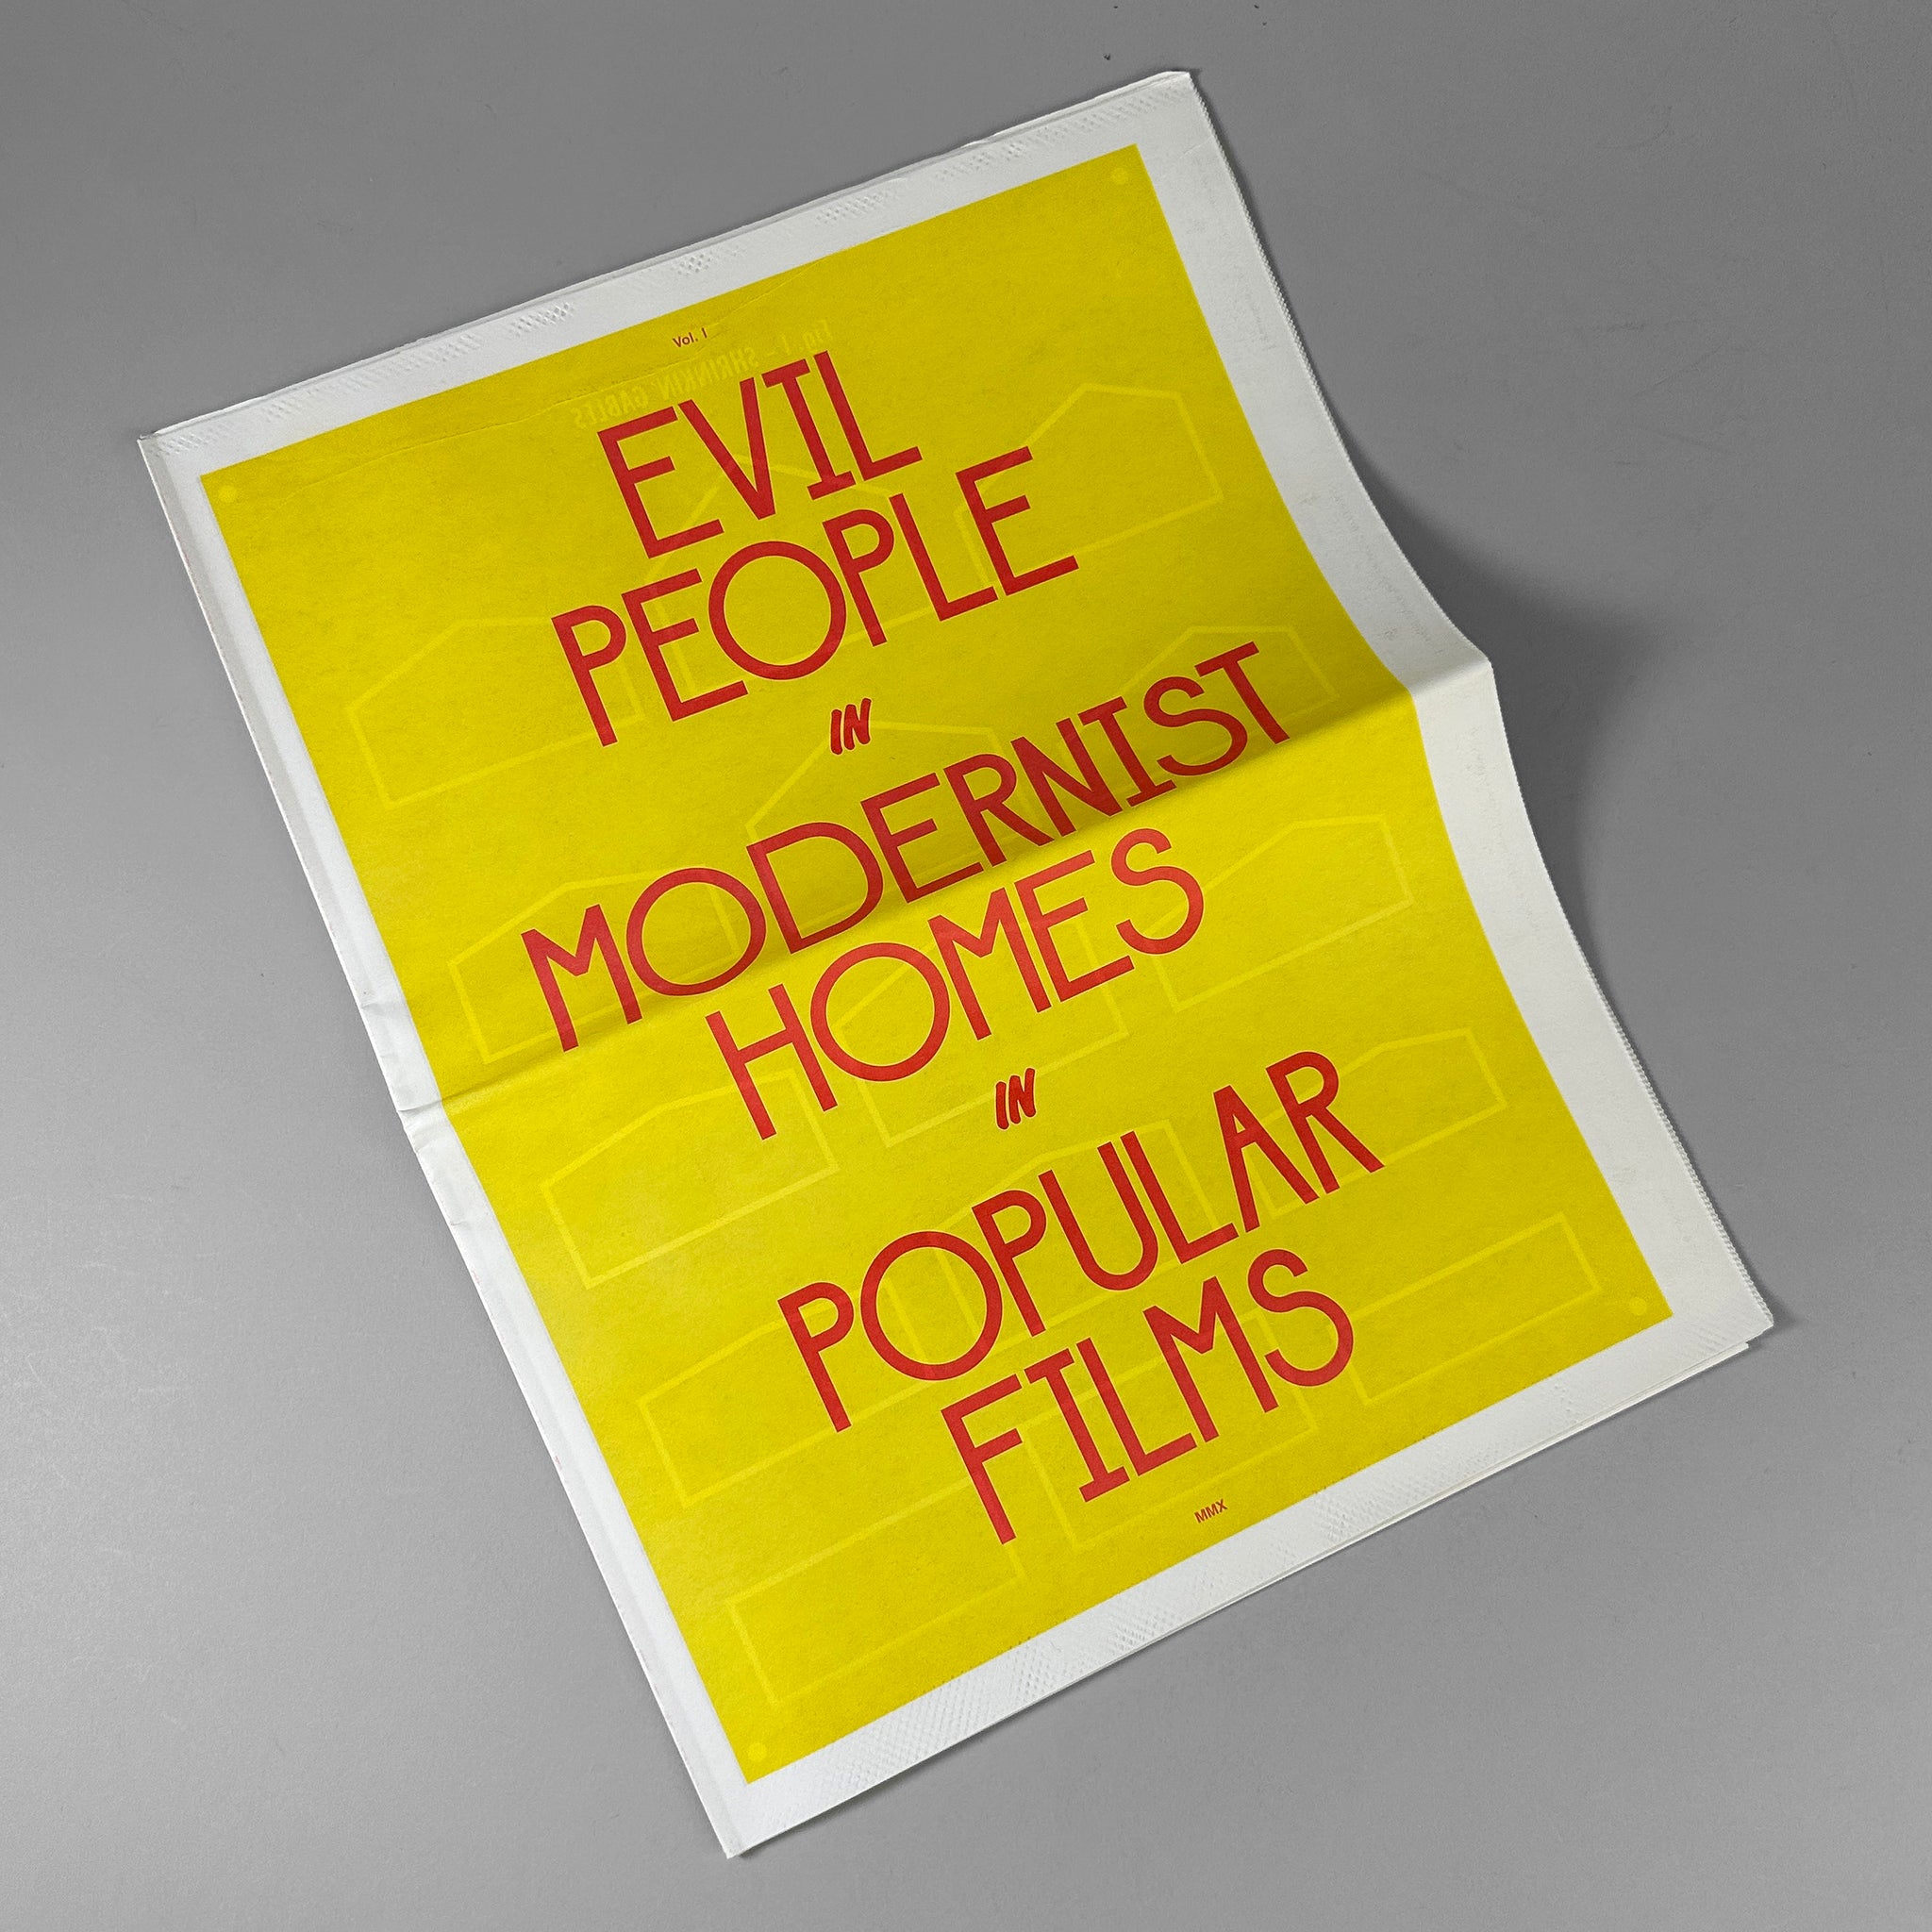 Evil People in Modernist Homes in Popular Films (Archive Copy)